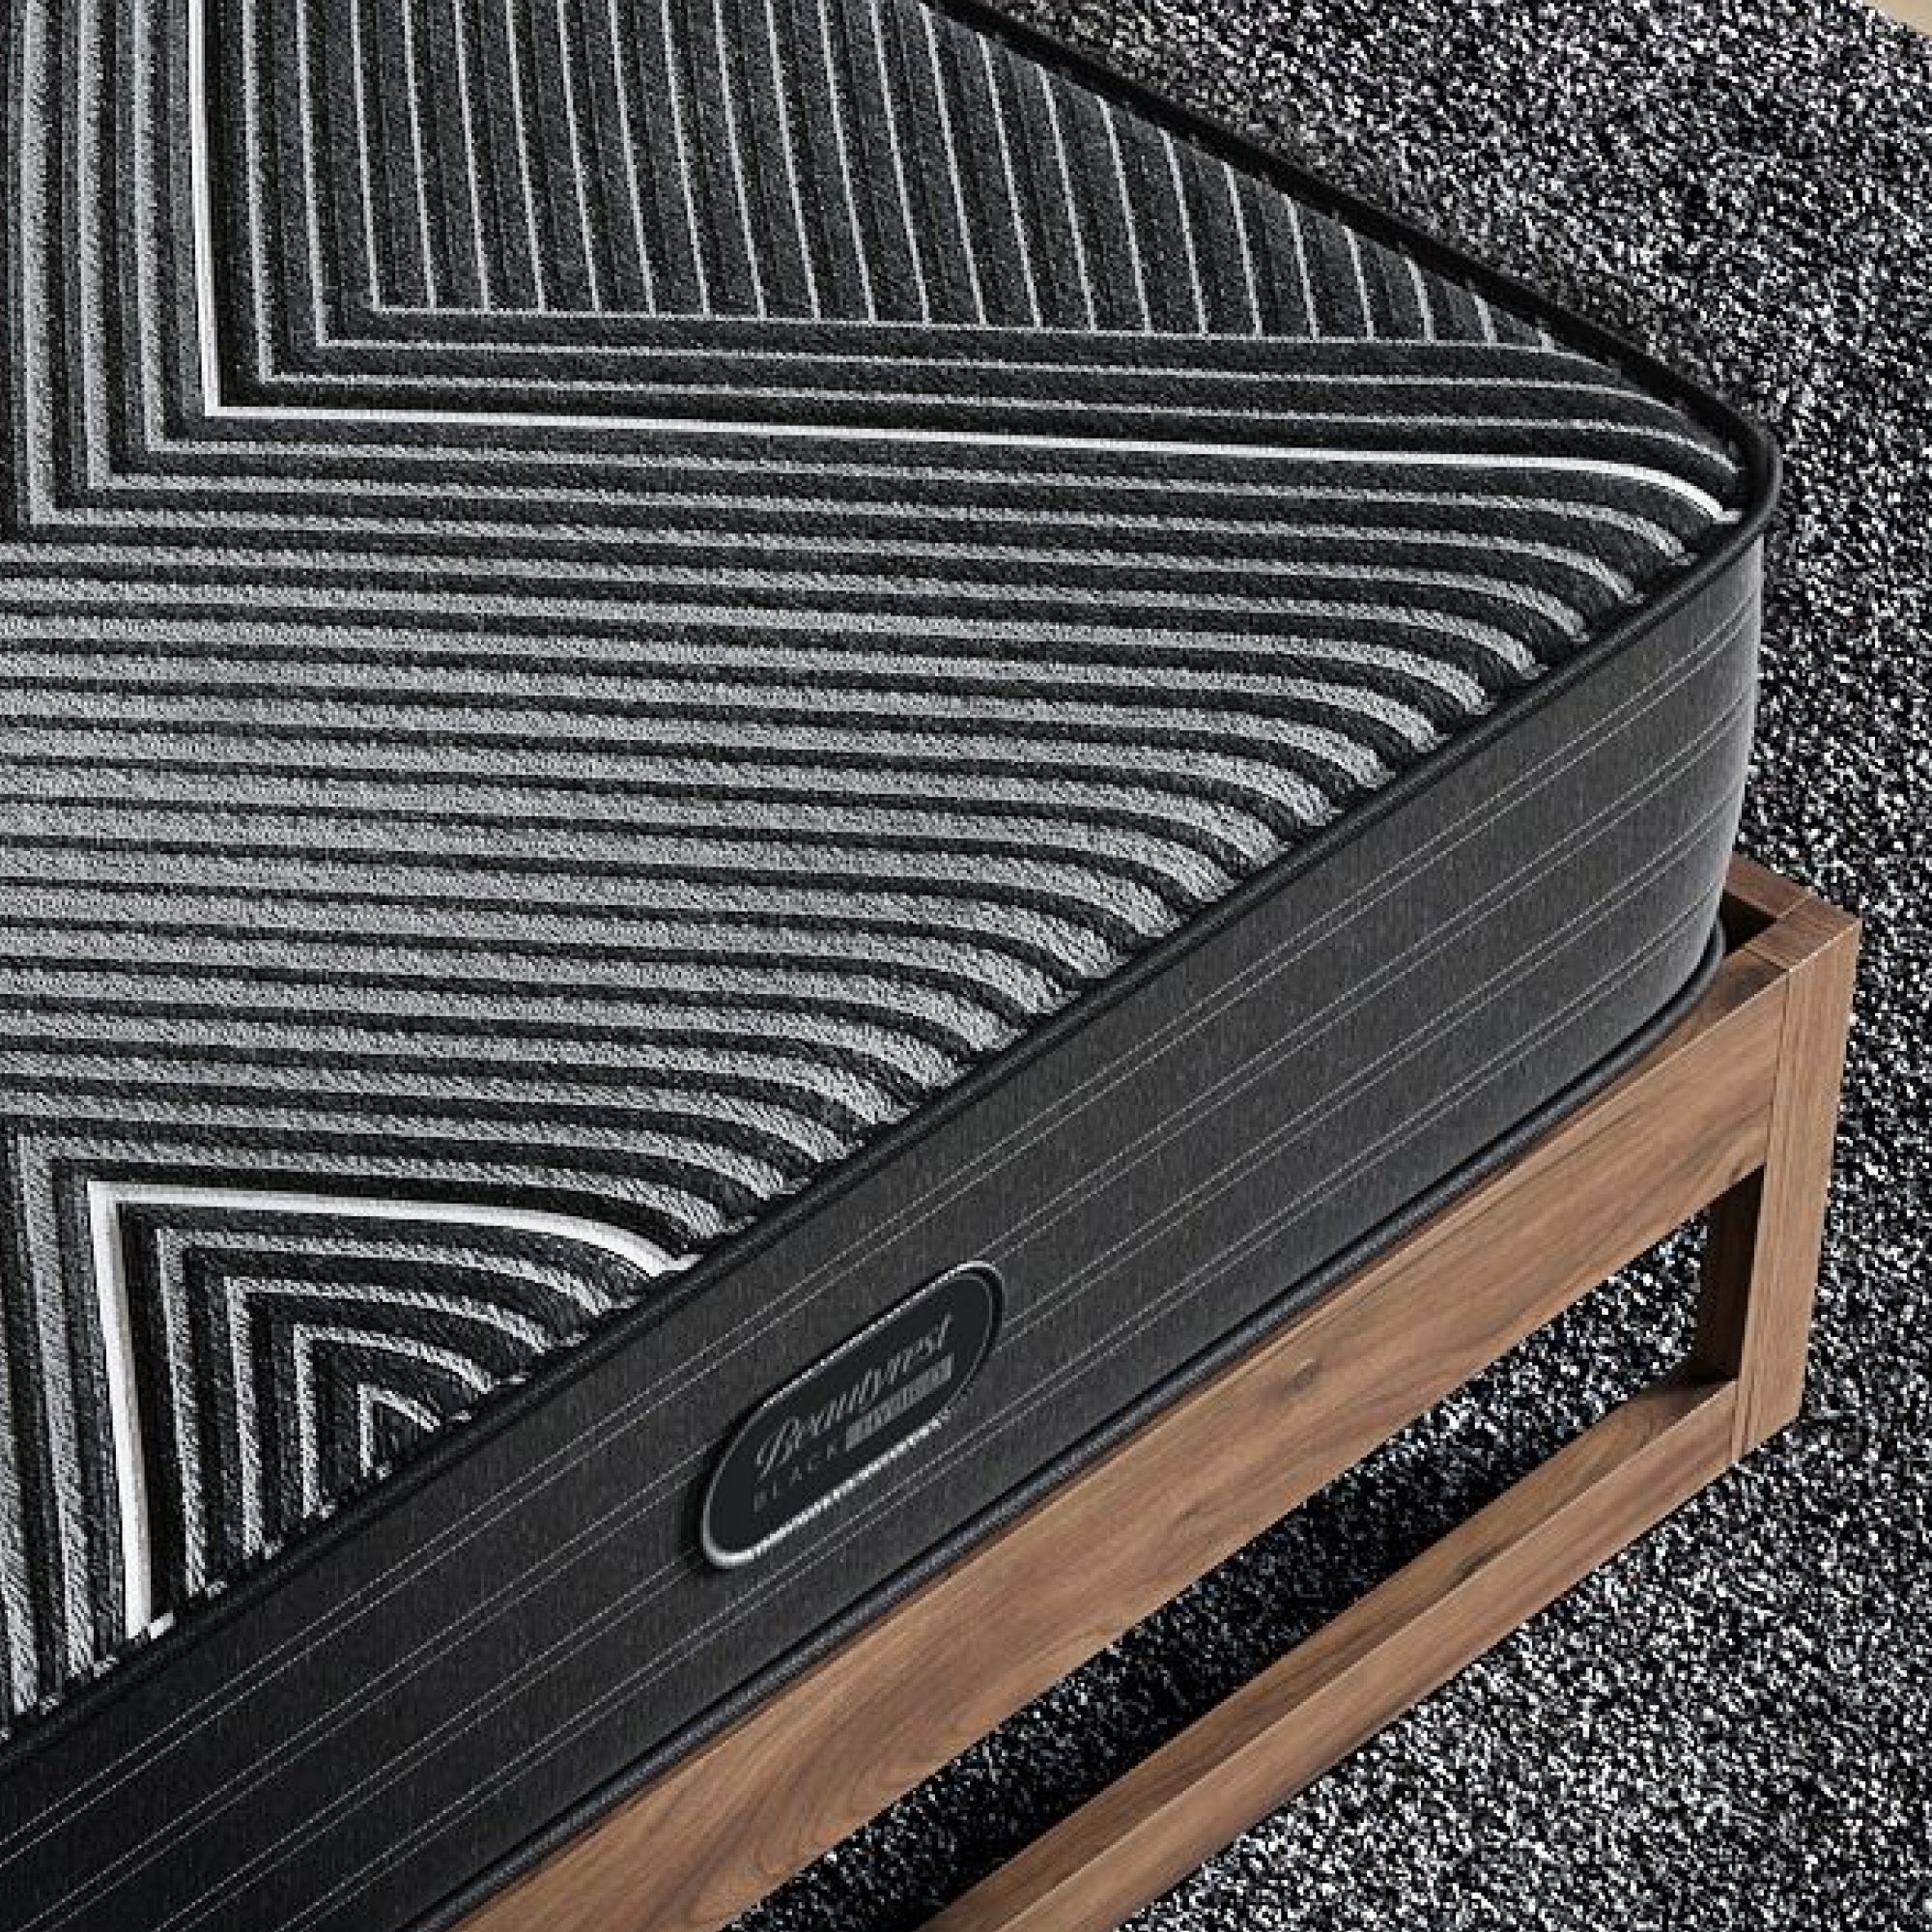 Corner view of the The Beautyrest Black hybrid mattress || series: grand bx-class || feel: plush